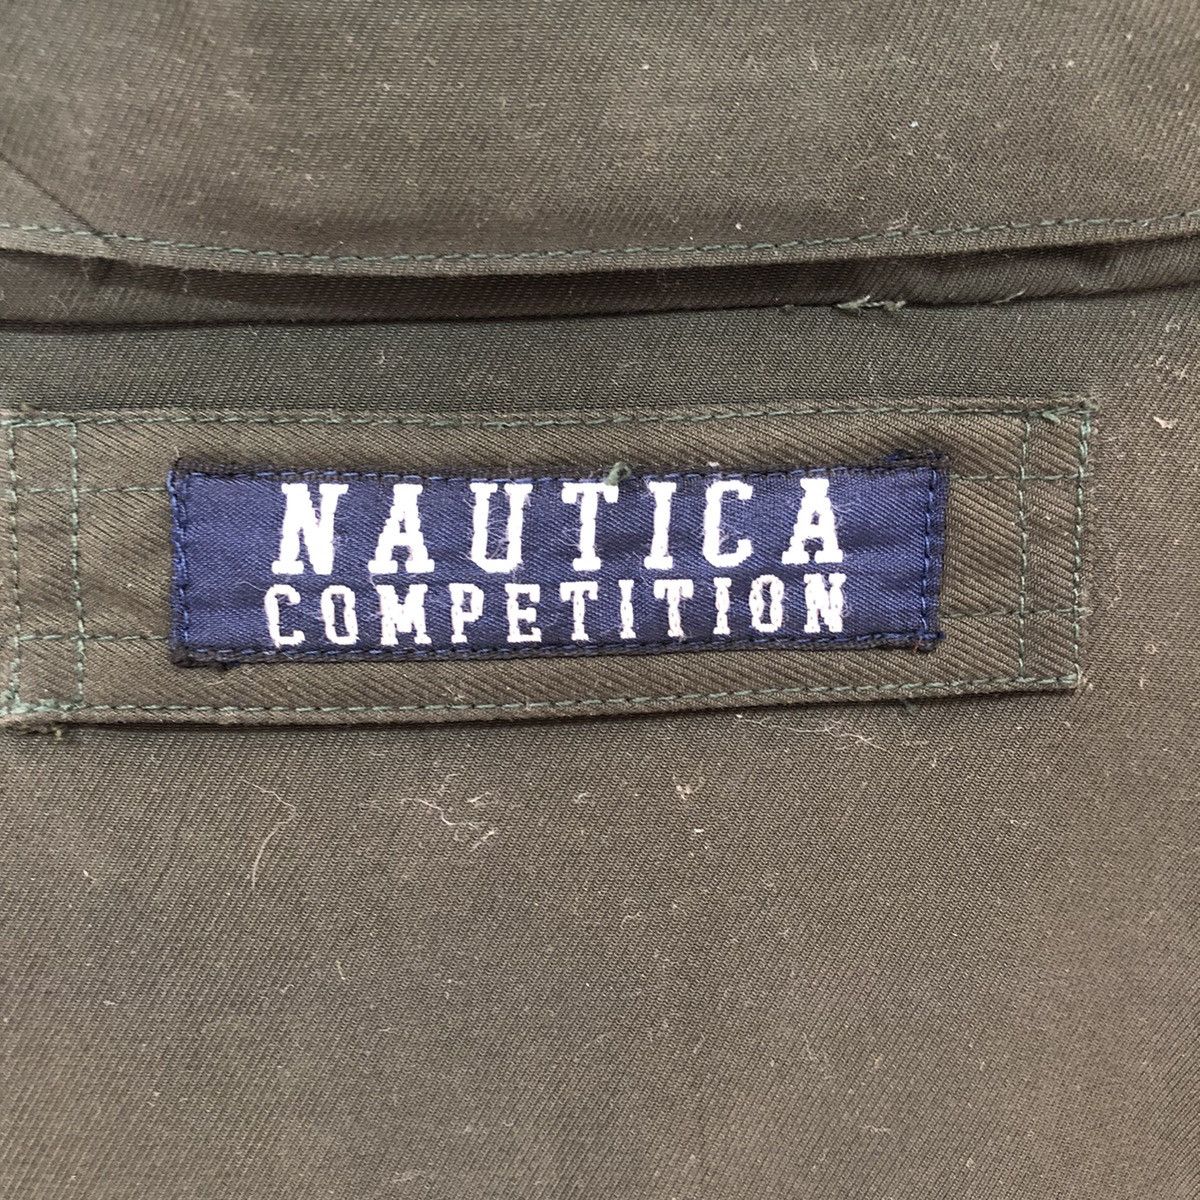 Nautica Competition Jacket - 11